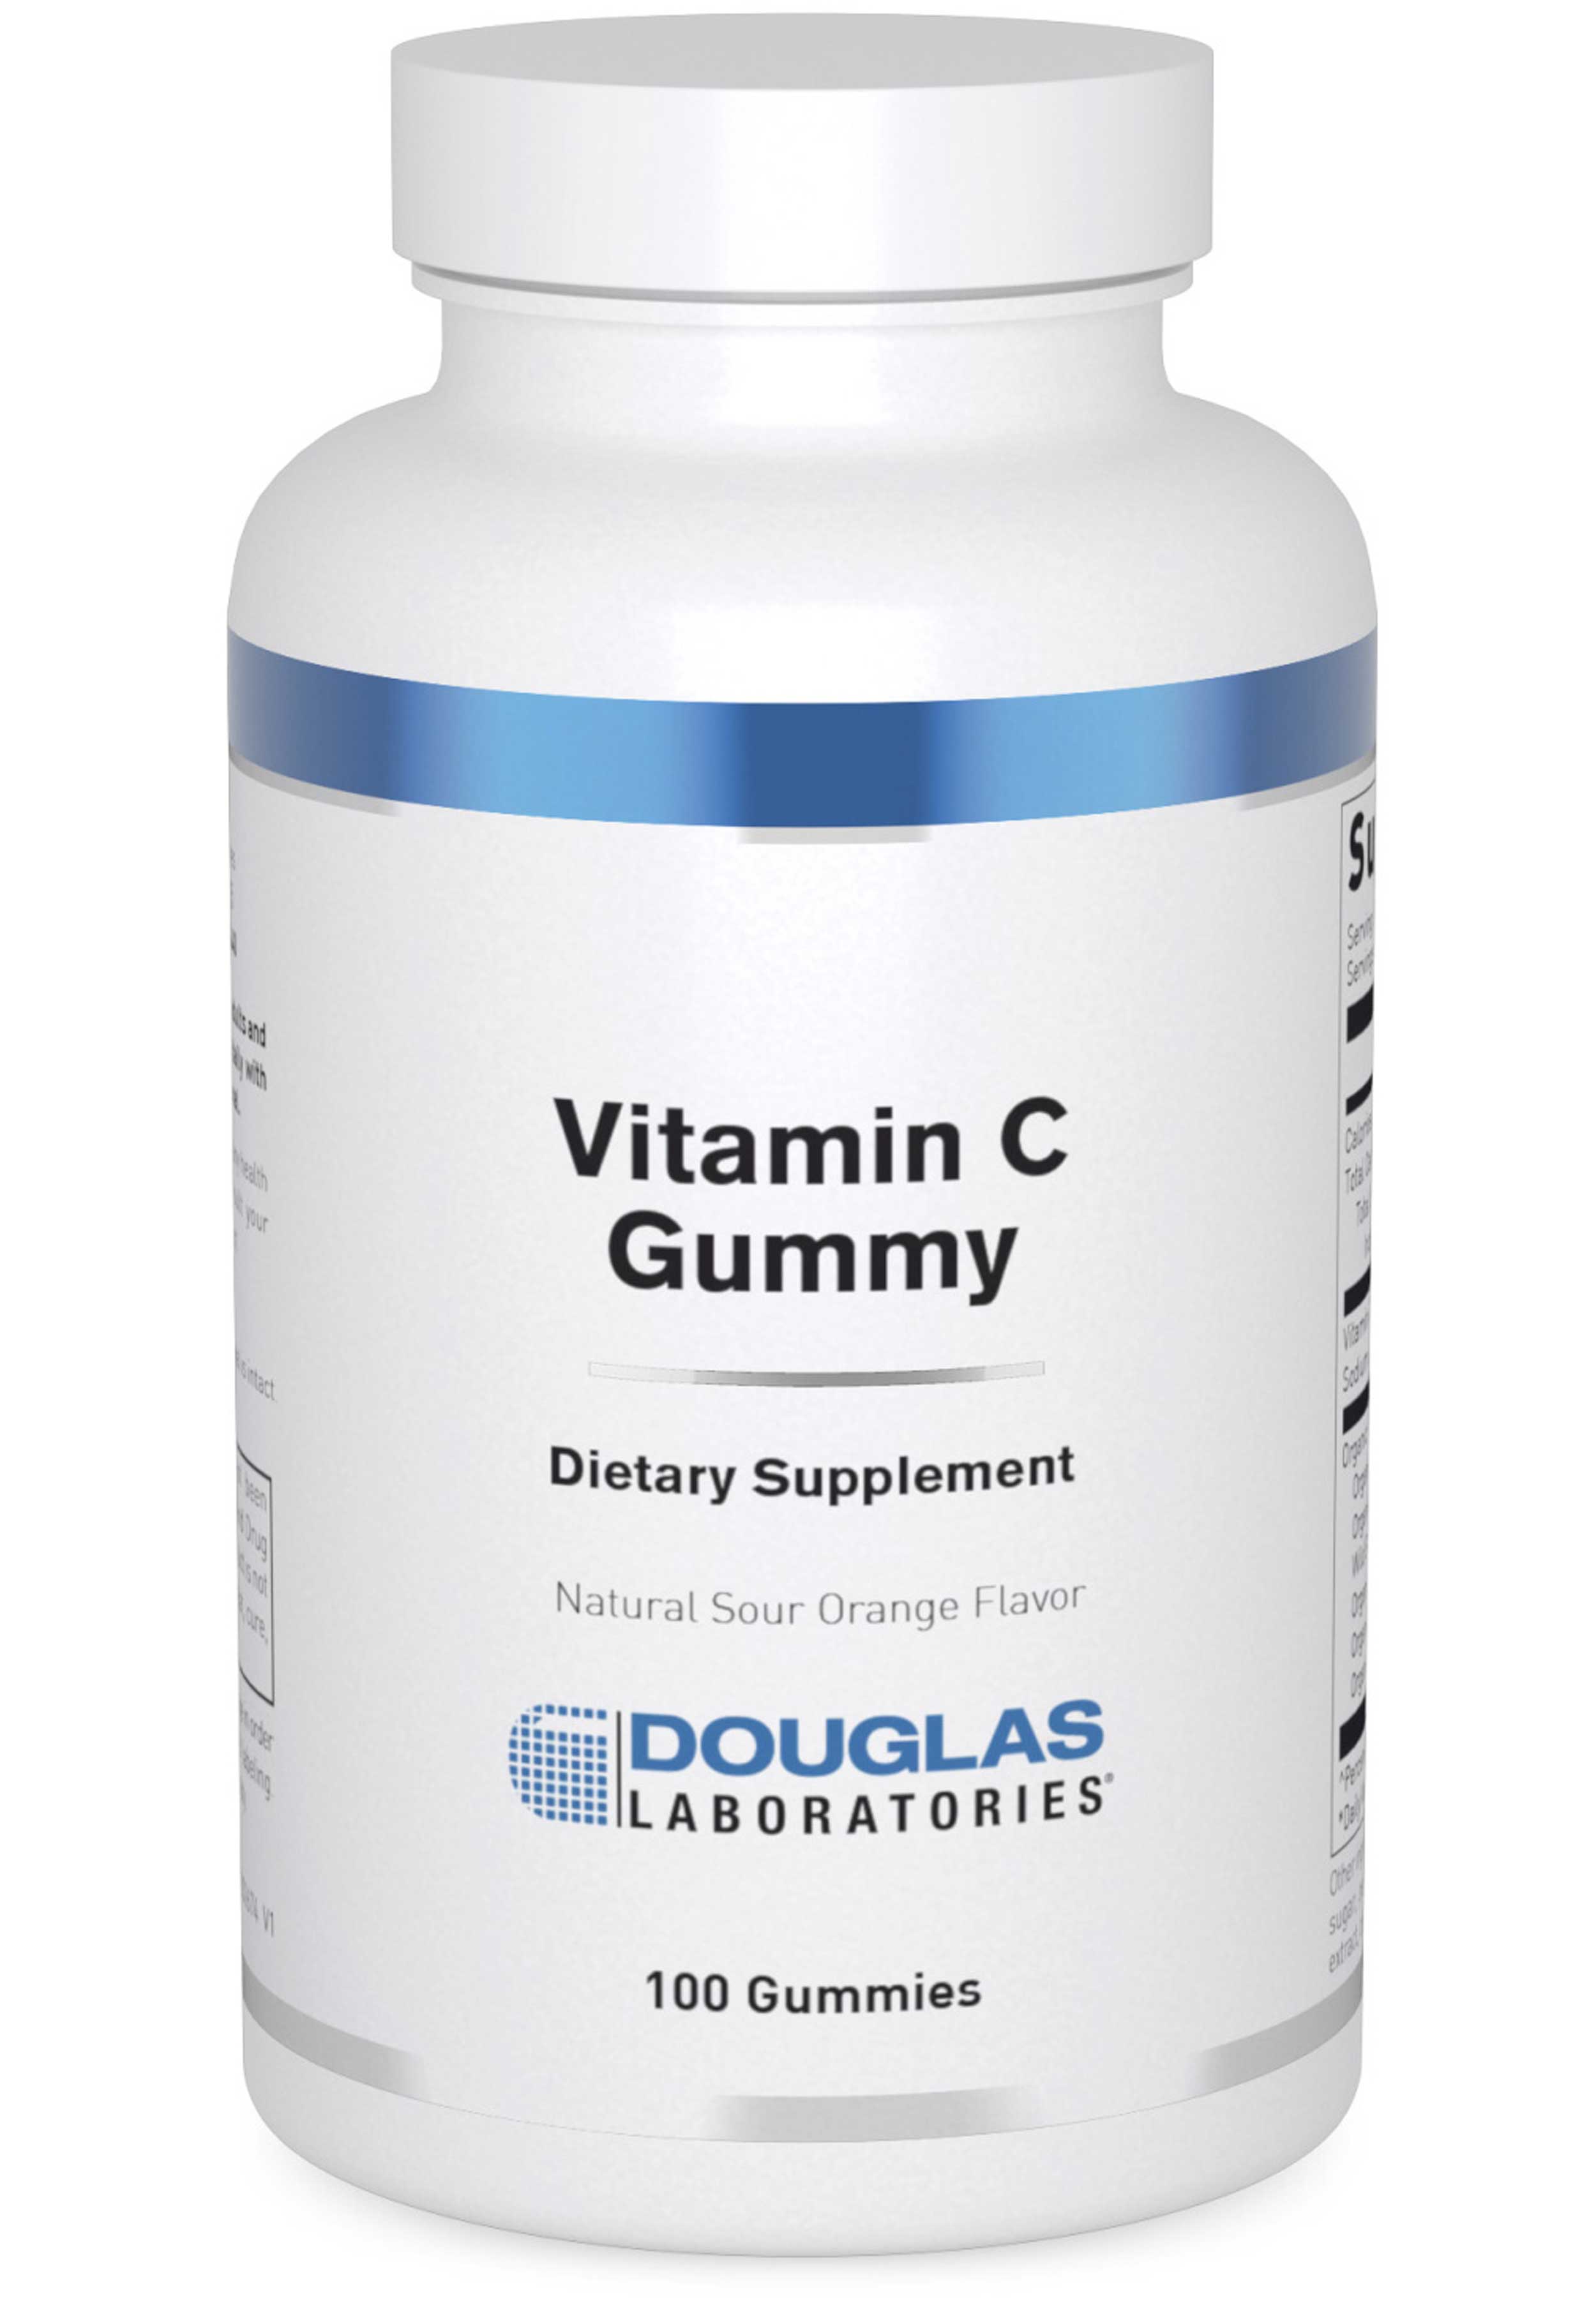 Douglas Laboratories Vitamin C Gummy